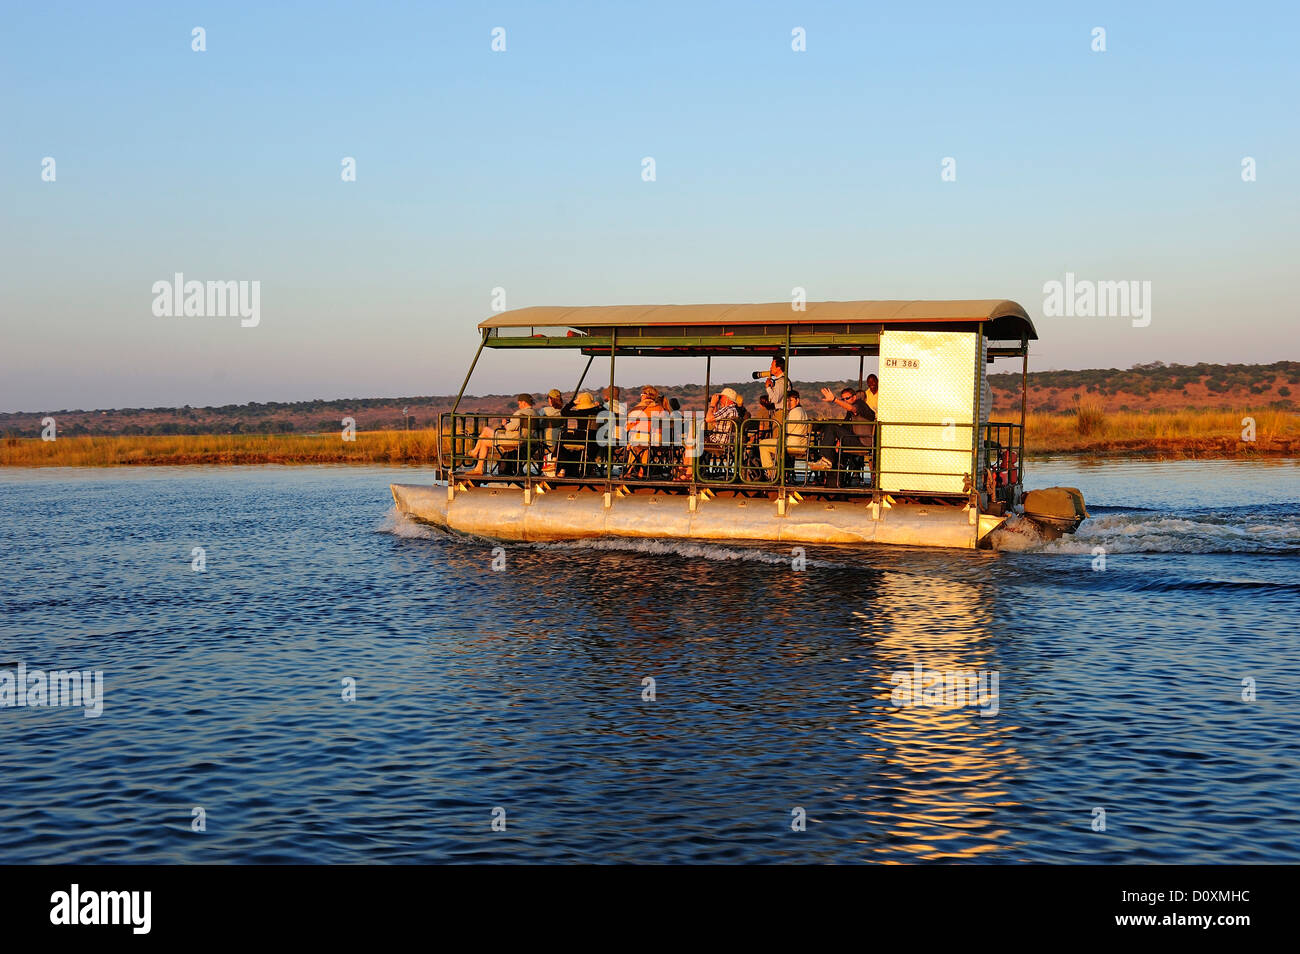 Africa, Botswana, Chobe National Park, elefante, animale, safari, acqua, fiume, tour in barca, turistico Foto Stock